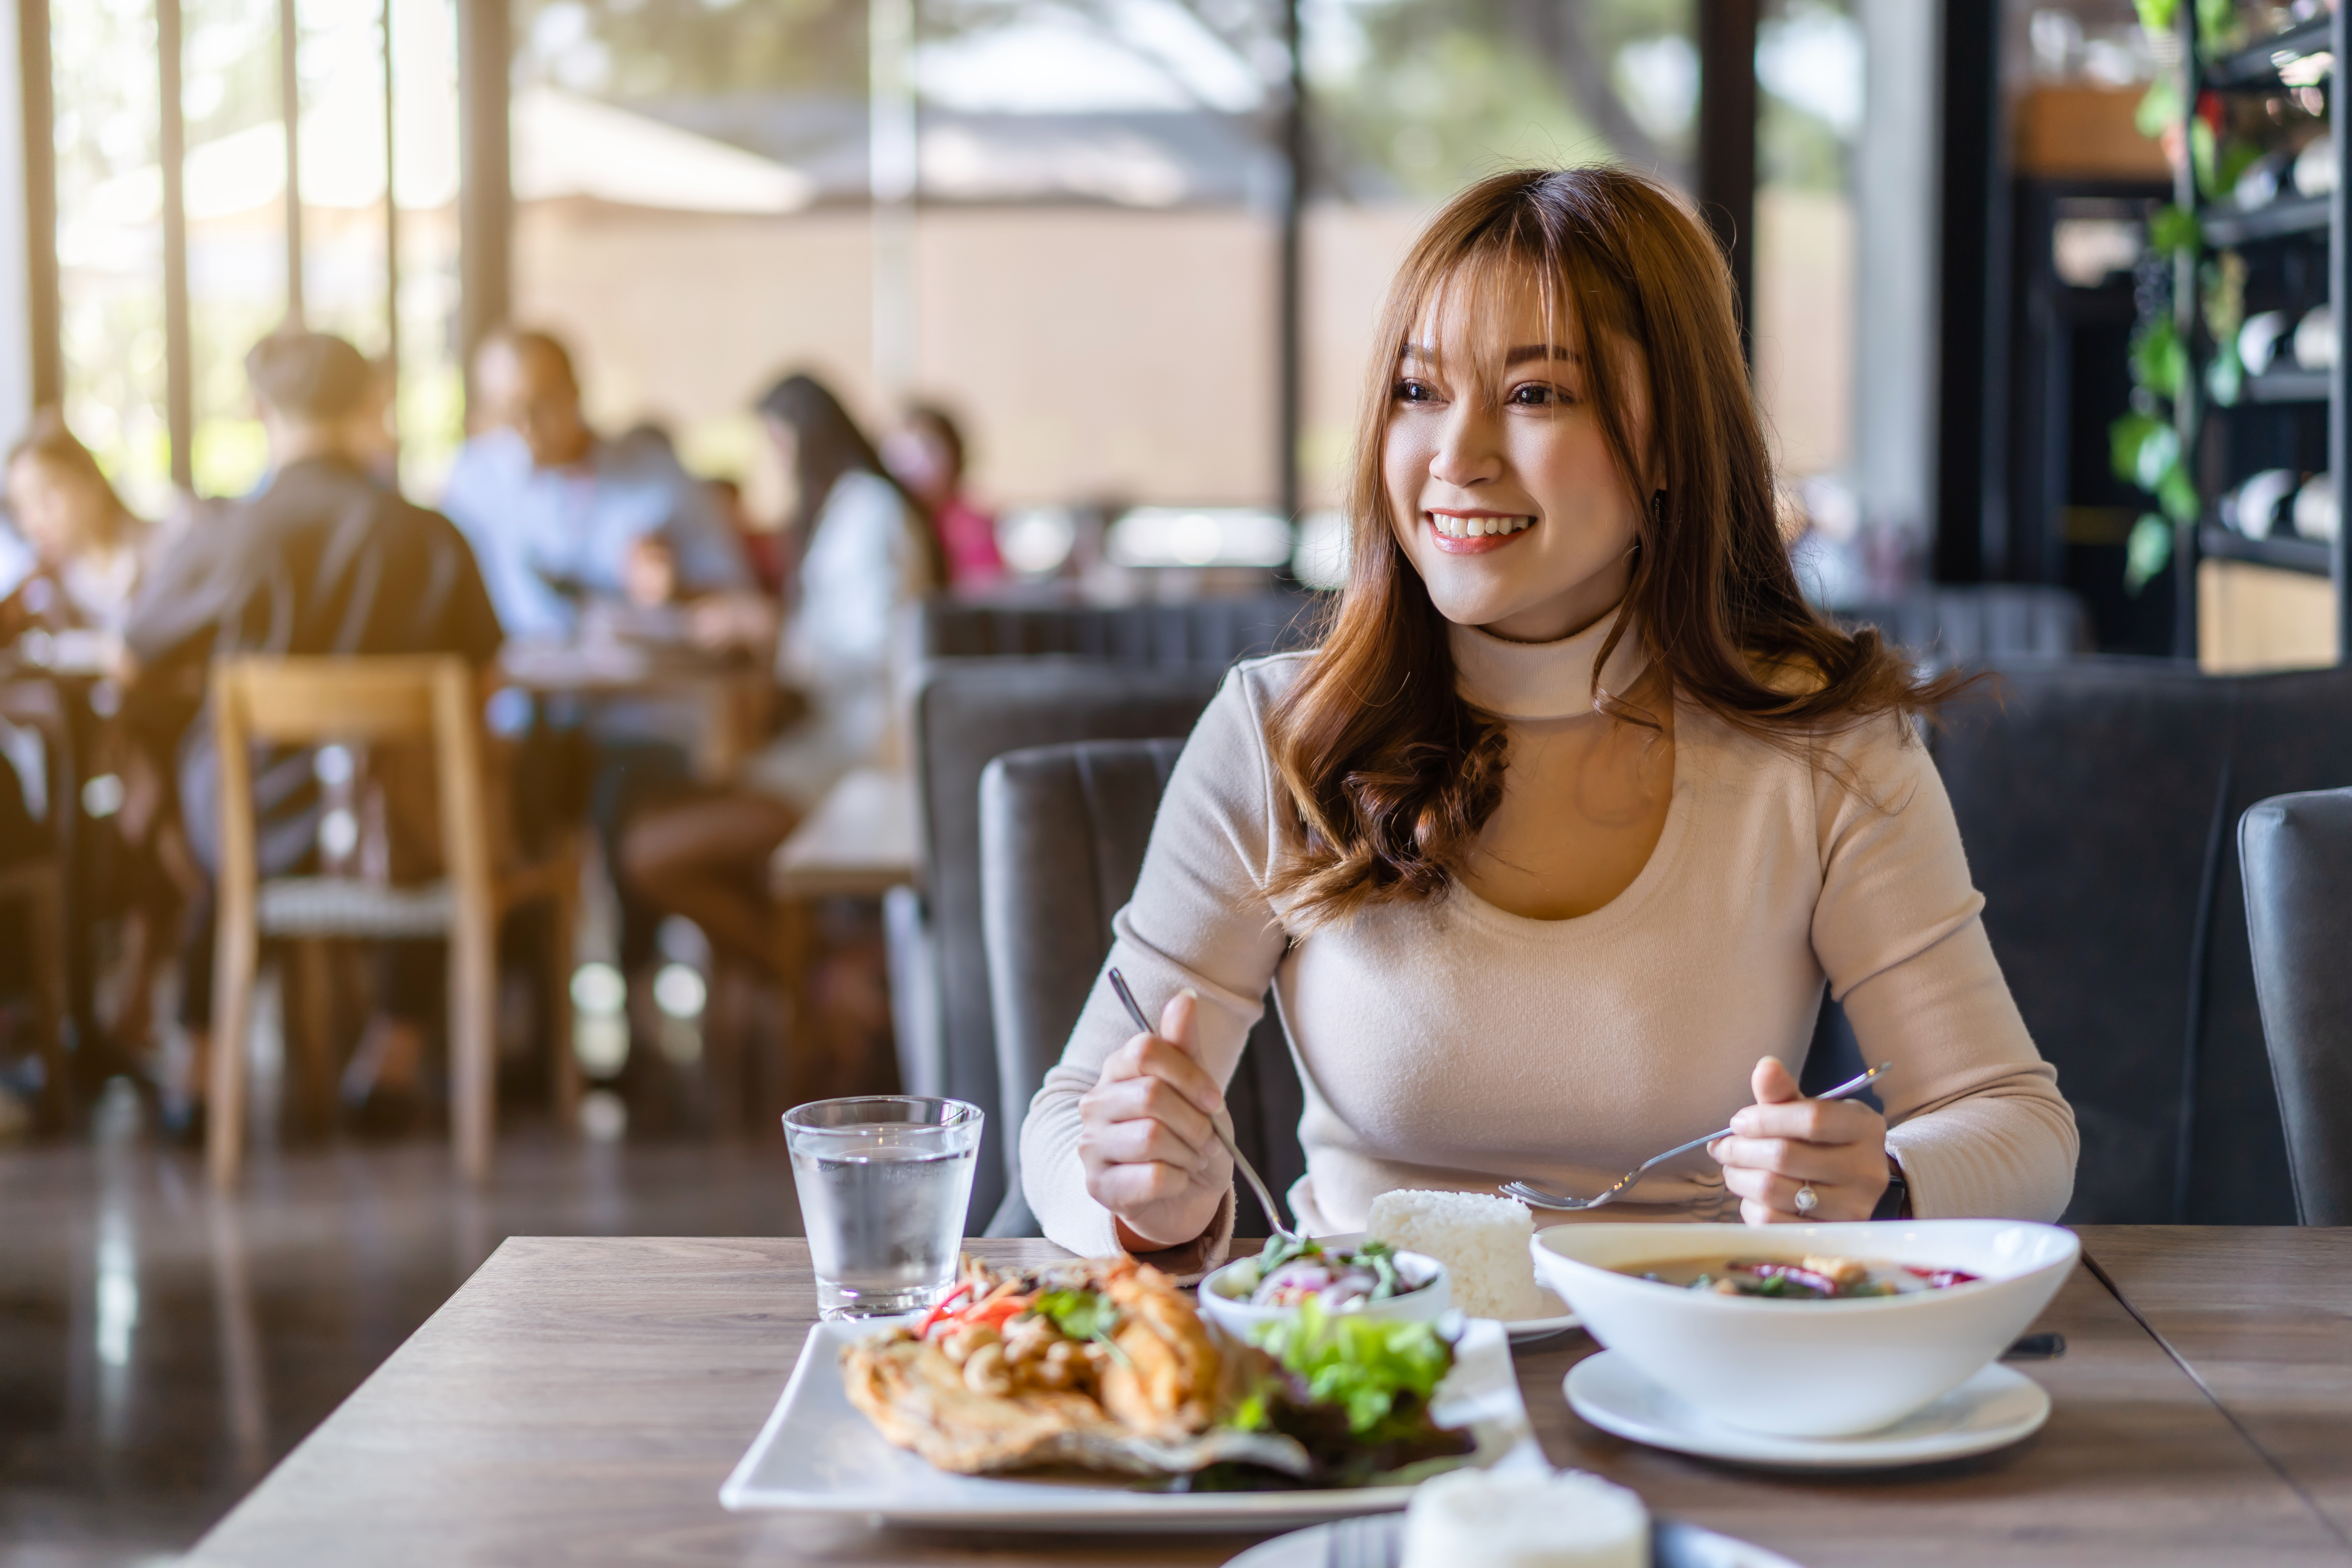 Une femme mangeant dans un restaurant | Source : Shutterstock